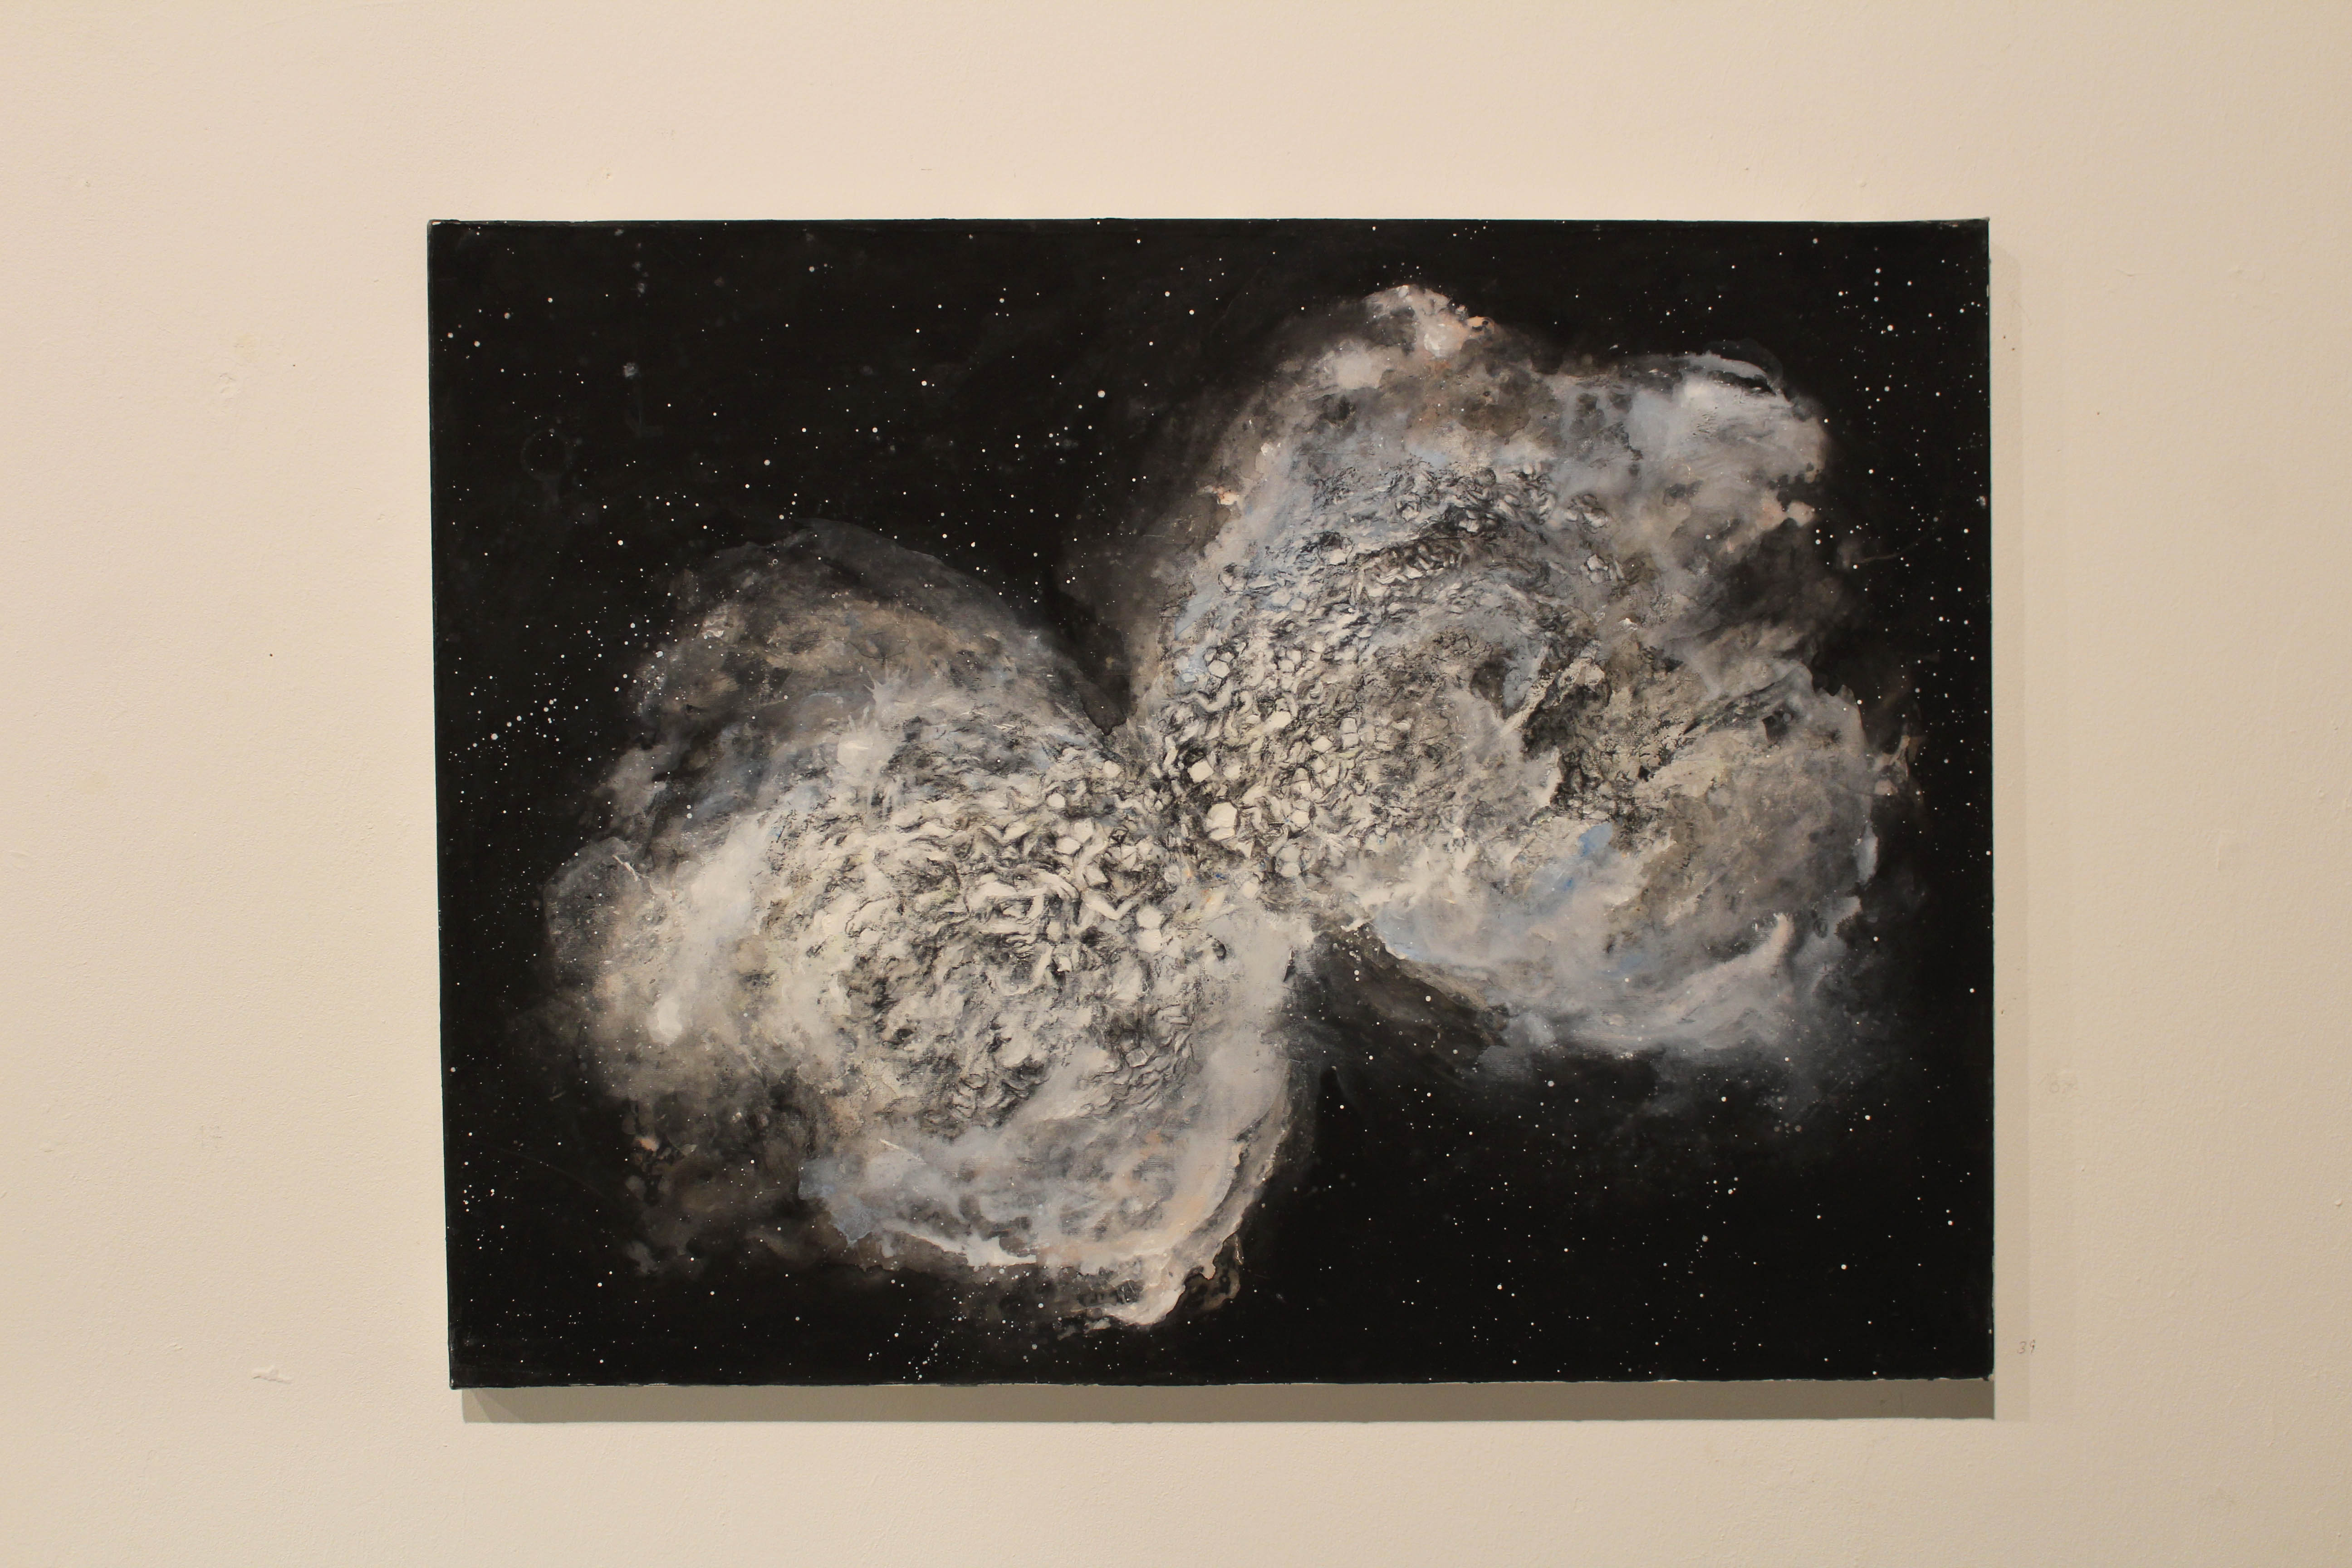  Acryl und Kohle auf Leinwand, 75 x 100 cm